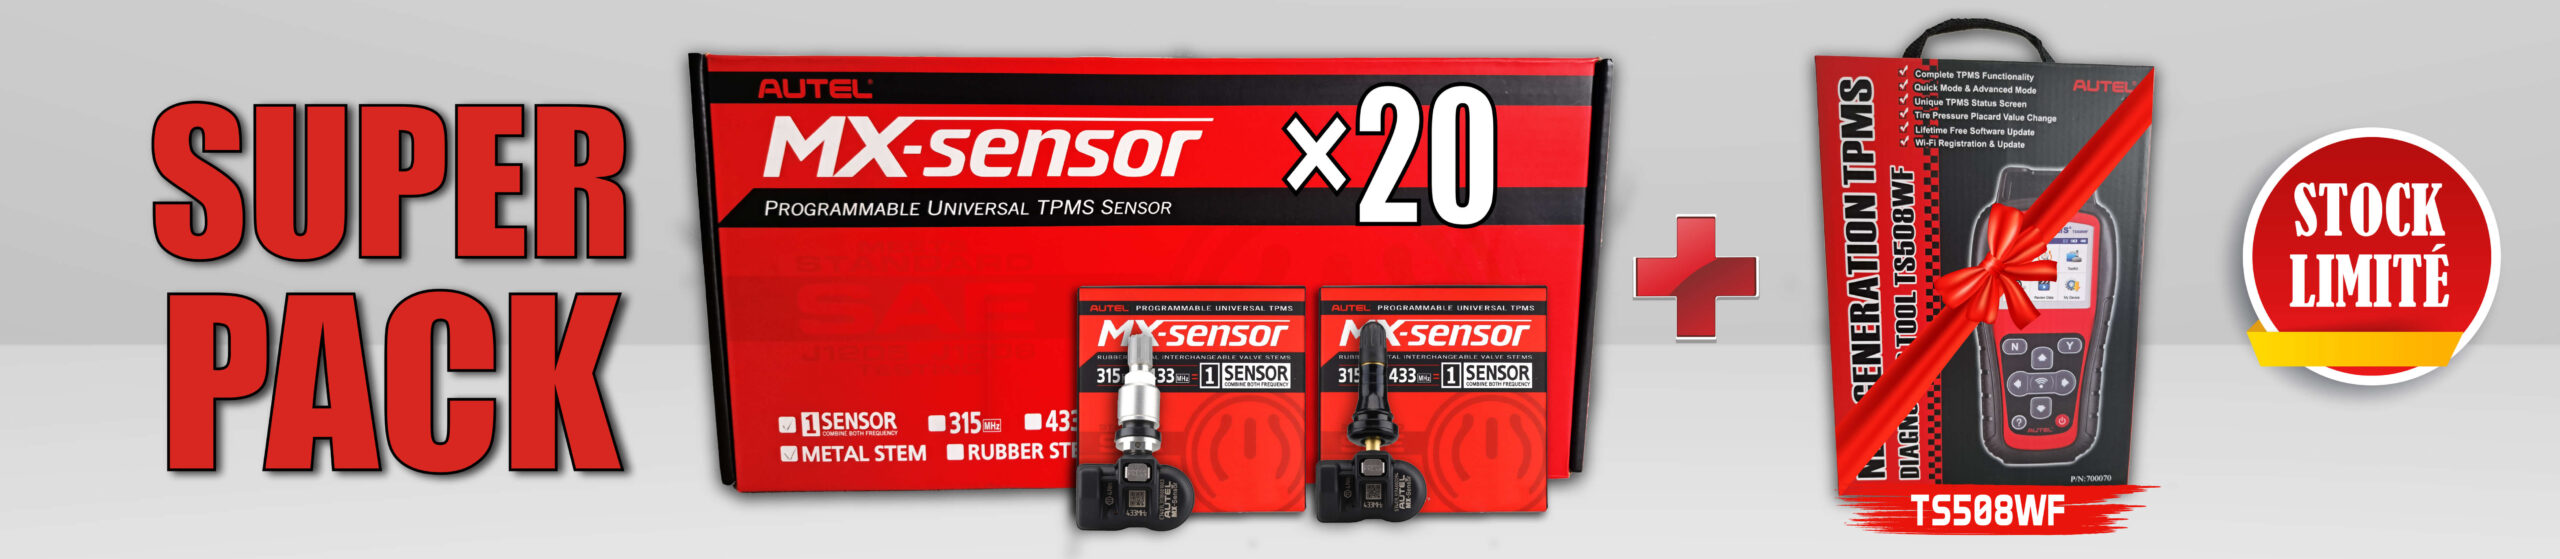 pack 20 mx sensor plus app maxi tpms gratuit